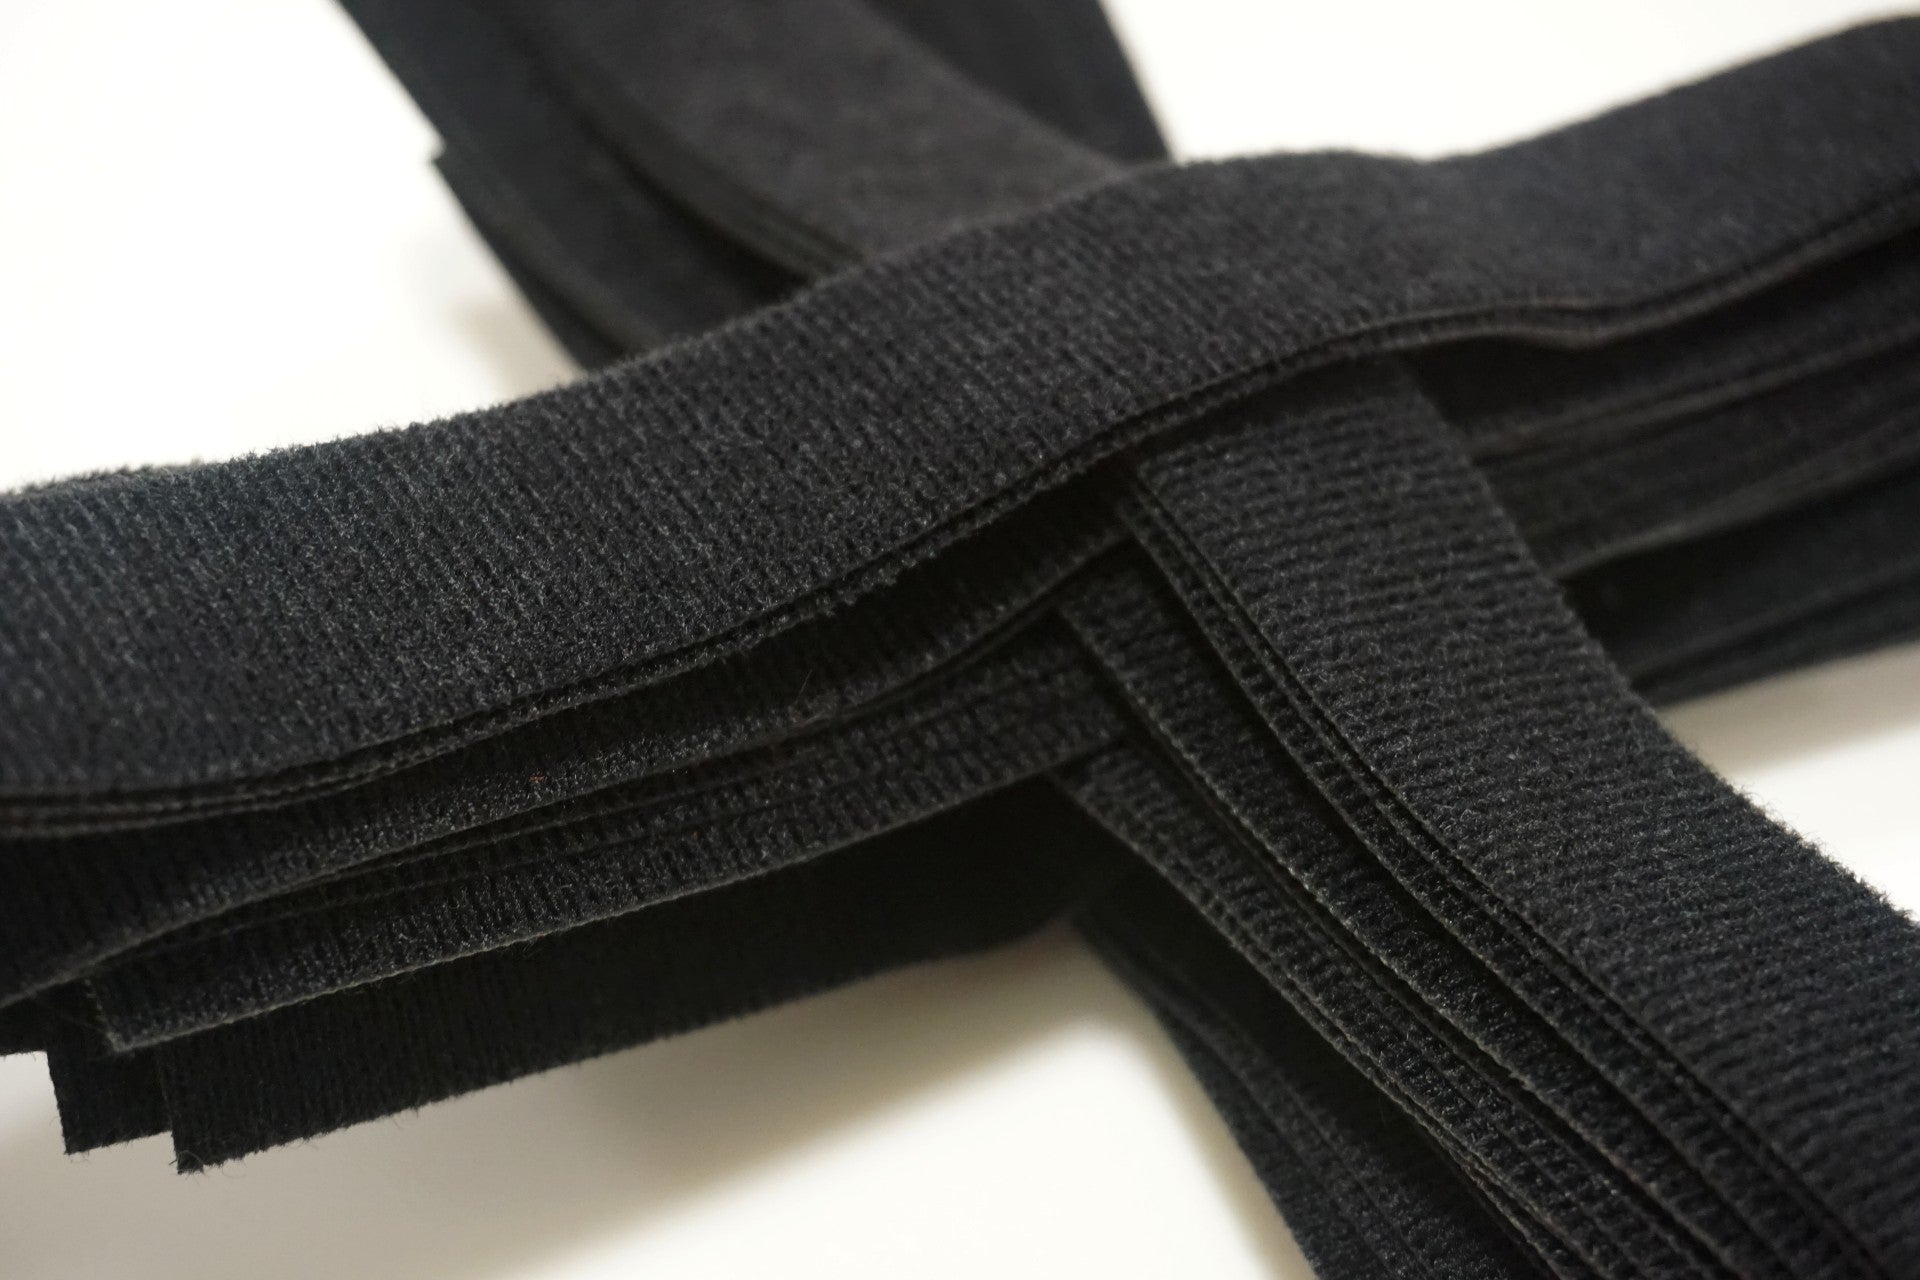 9.5 Velcro/Nylon Replacement Wrist Straps